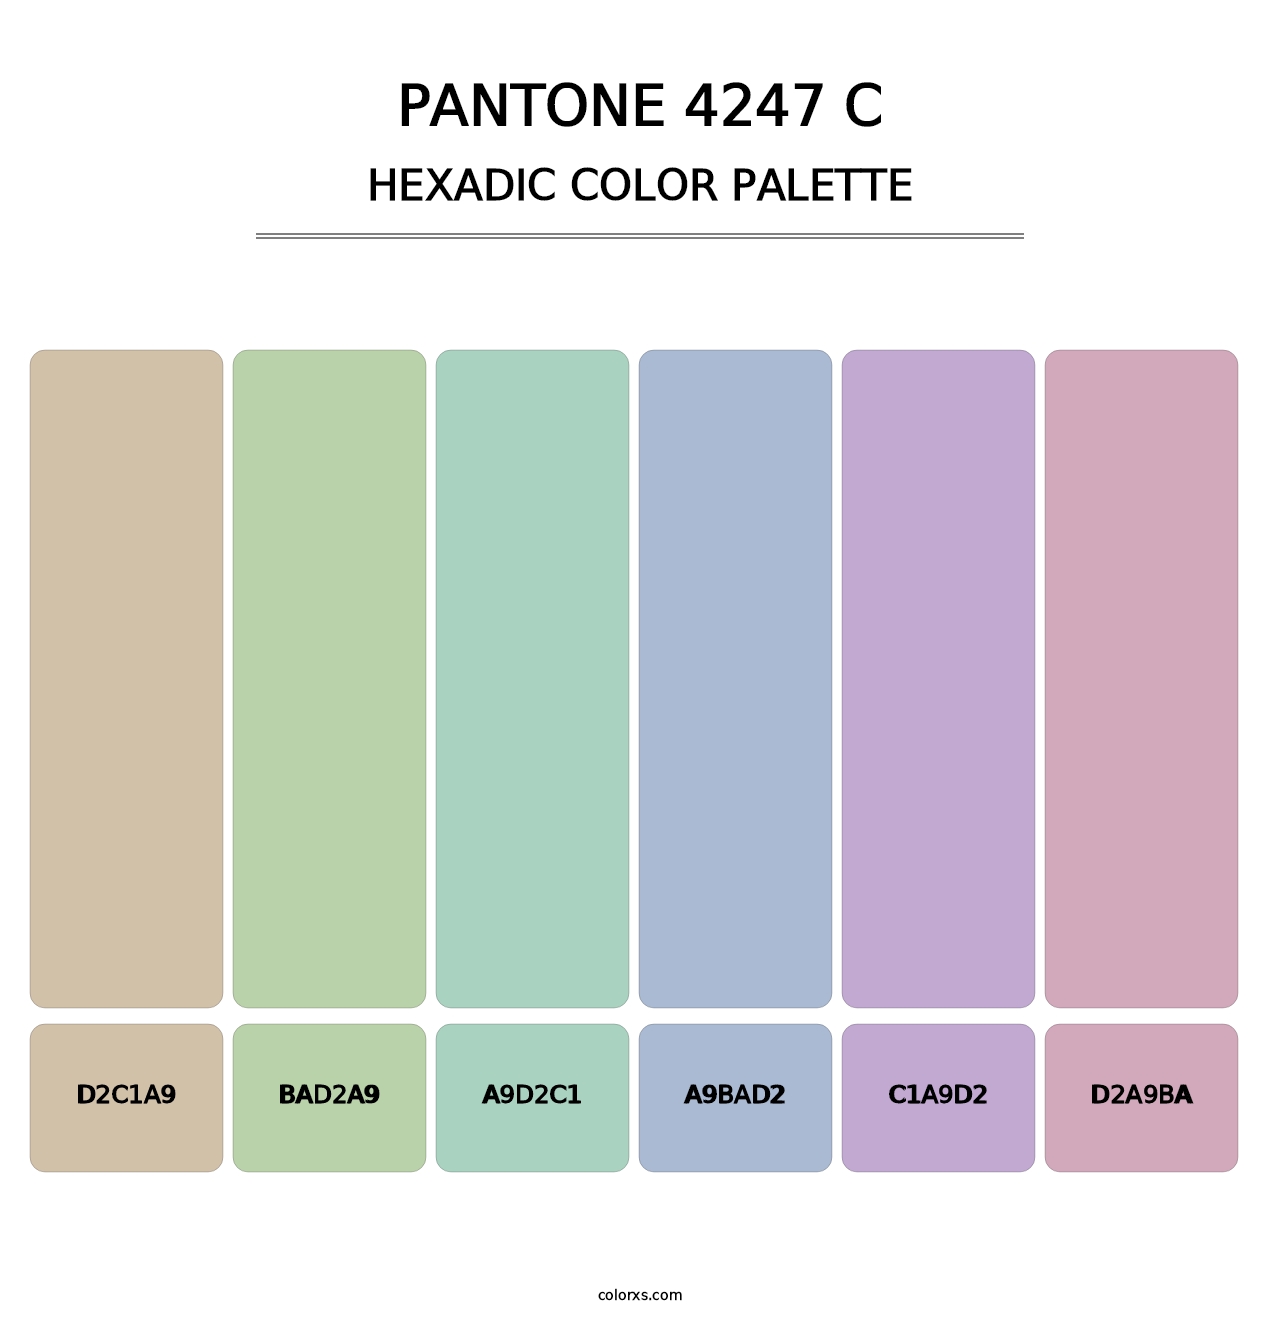 PANTONE 4247 C - Hexadic Color Palette